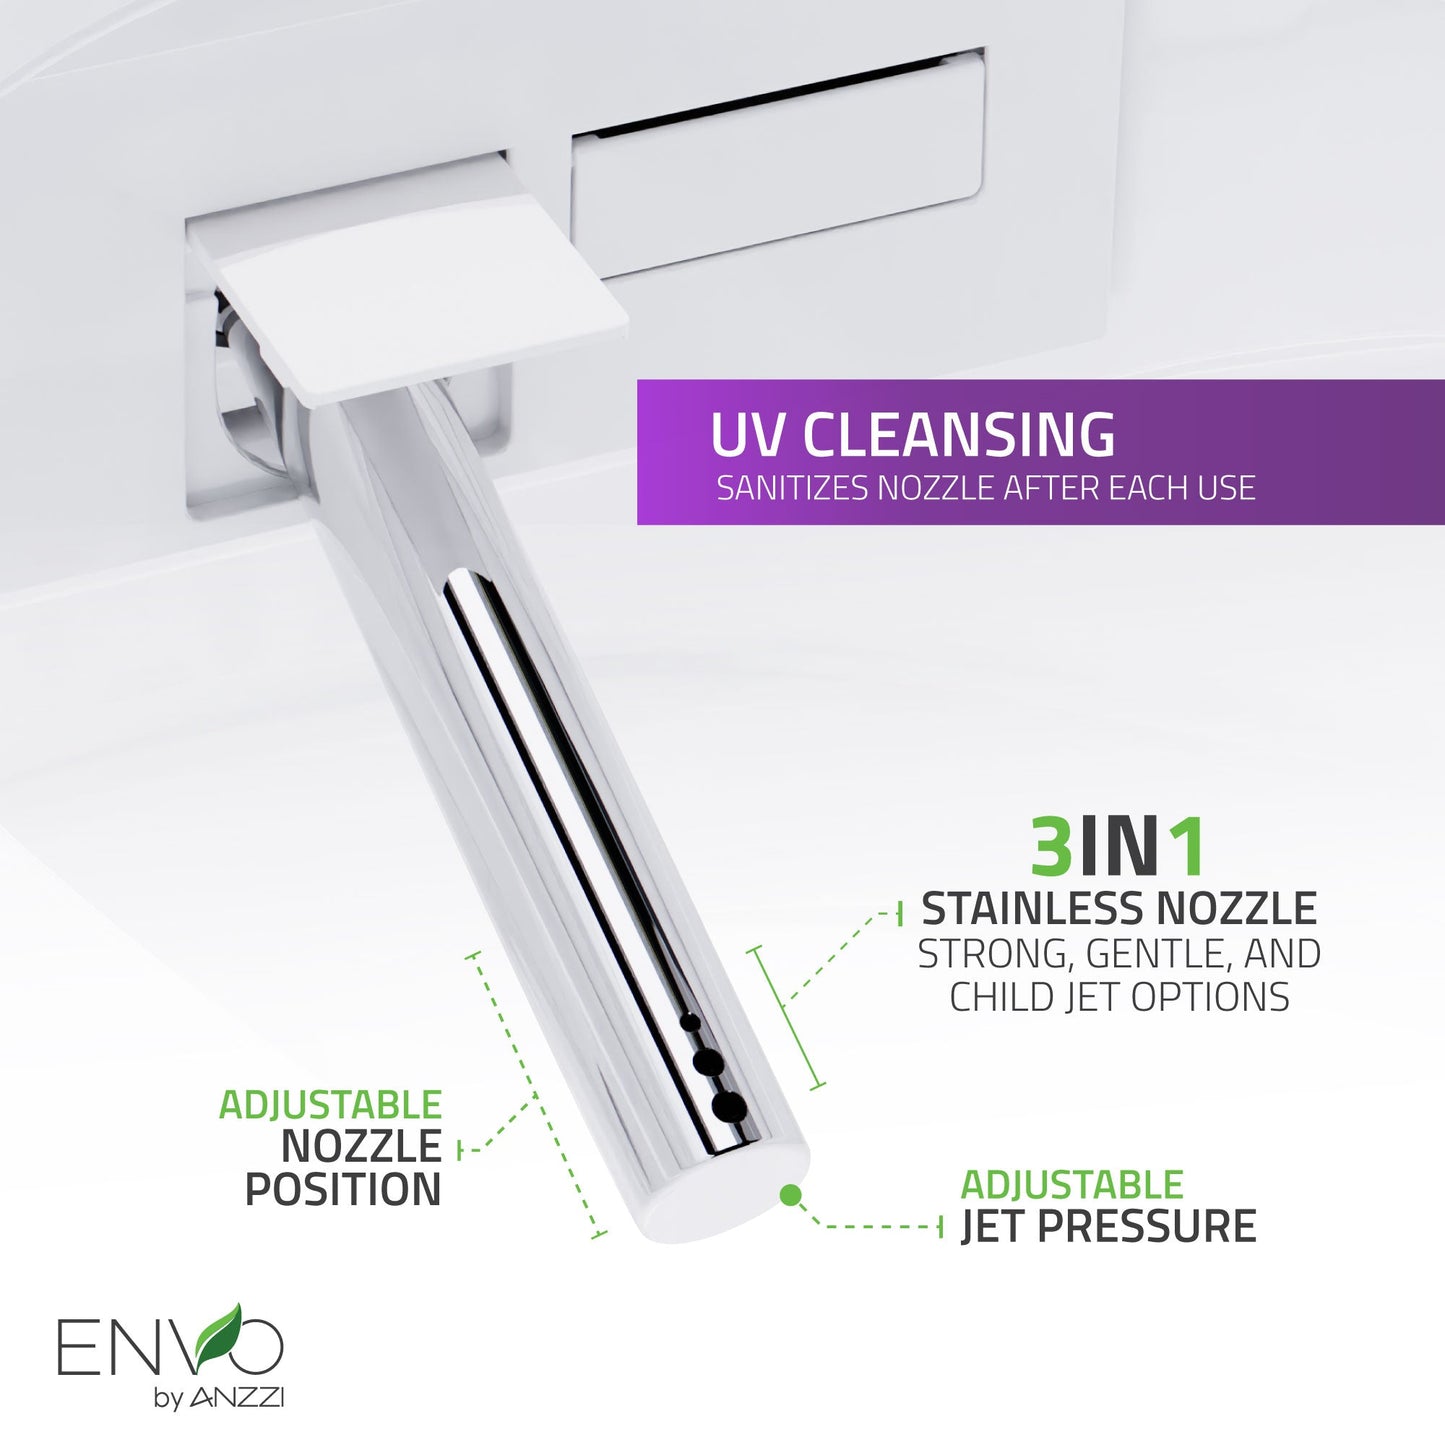 Anzzi Envo TL-STFF950WH  ENVO ENVO Echo Elongated Smart Toilet Bidet in White with Auto Open, Auto Close, Auto Flush, and Heated Seat